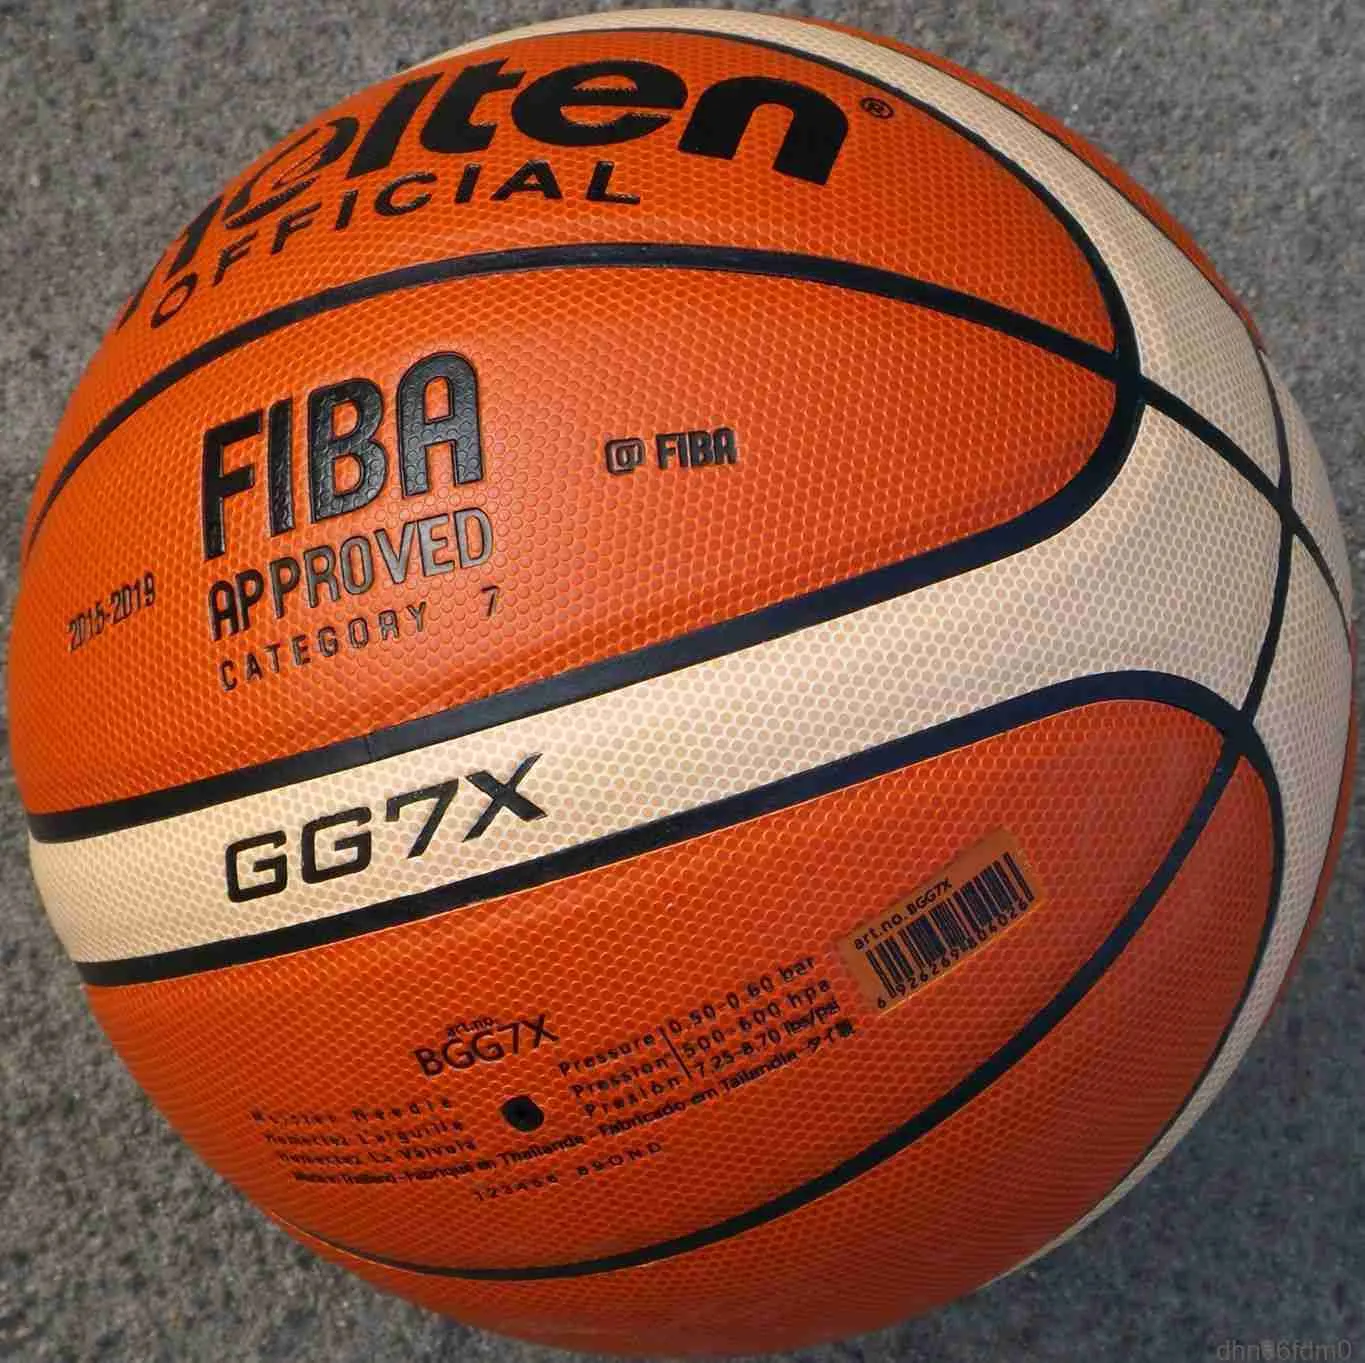 Palloni da basket per interni ed esterni Approvati FIBA Taglia 7 Pelle PU Match Training Uomo Donna baloncesto 230210 C0S0